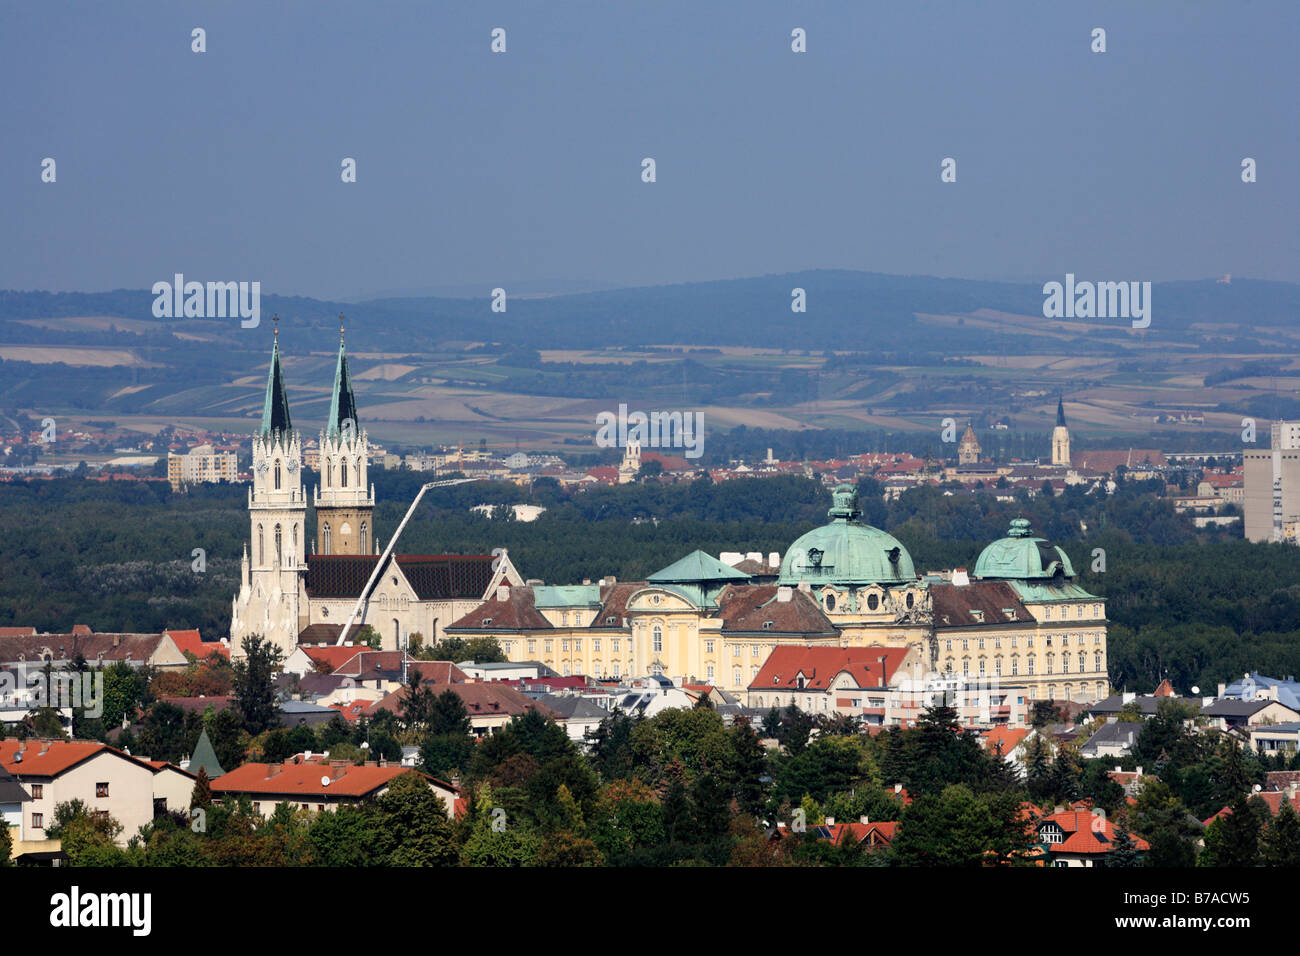 Monastero di Klosterneuburg, Austria Inferiore, Austria, Europa Foto Stock